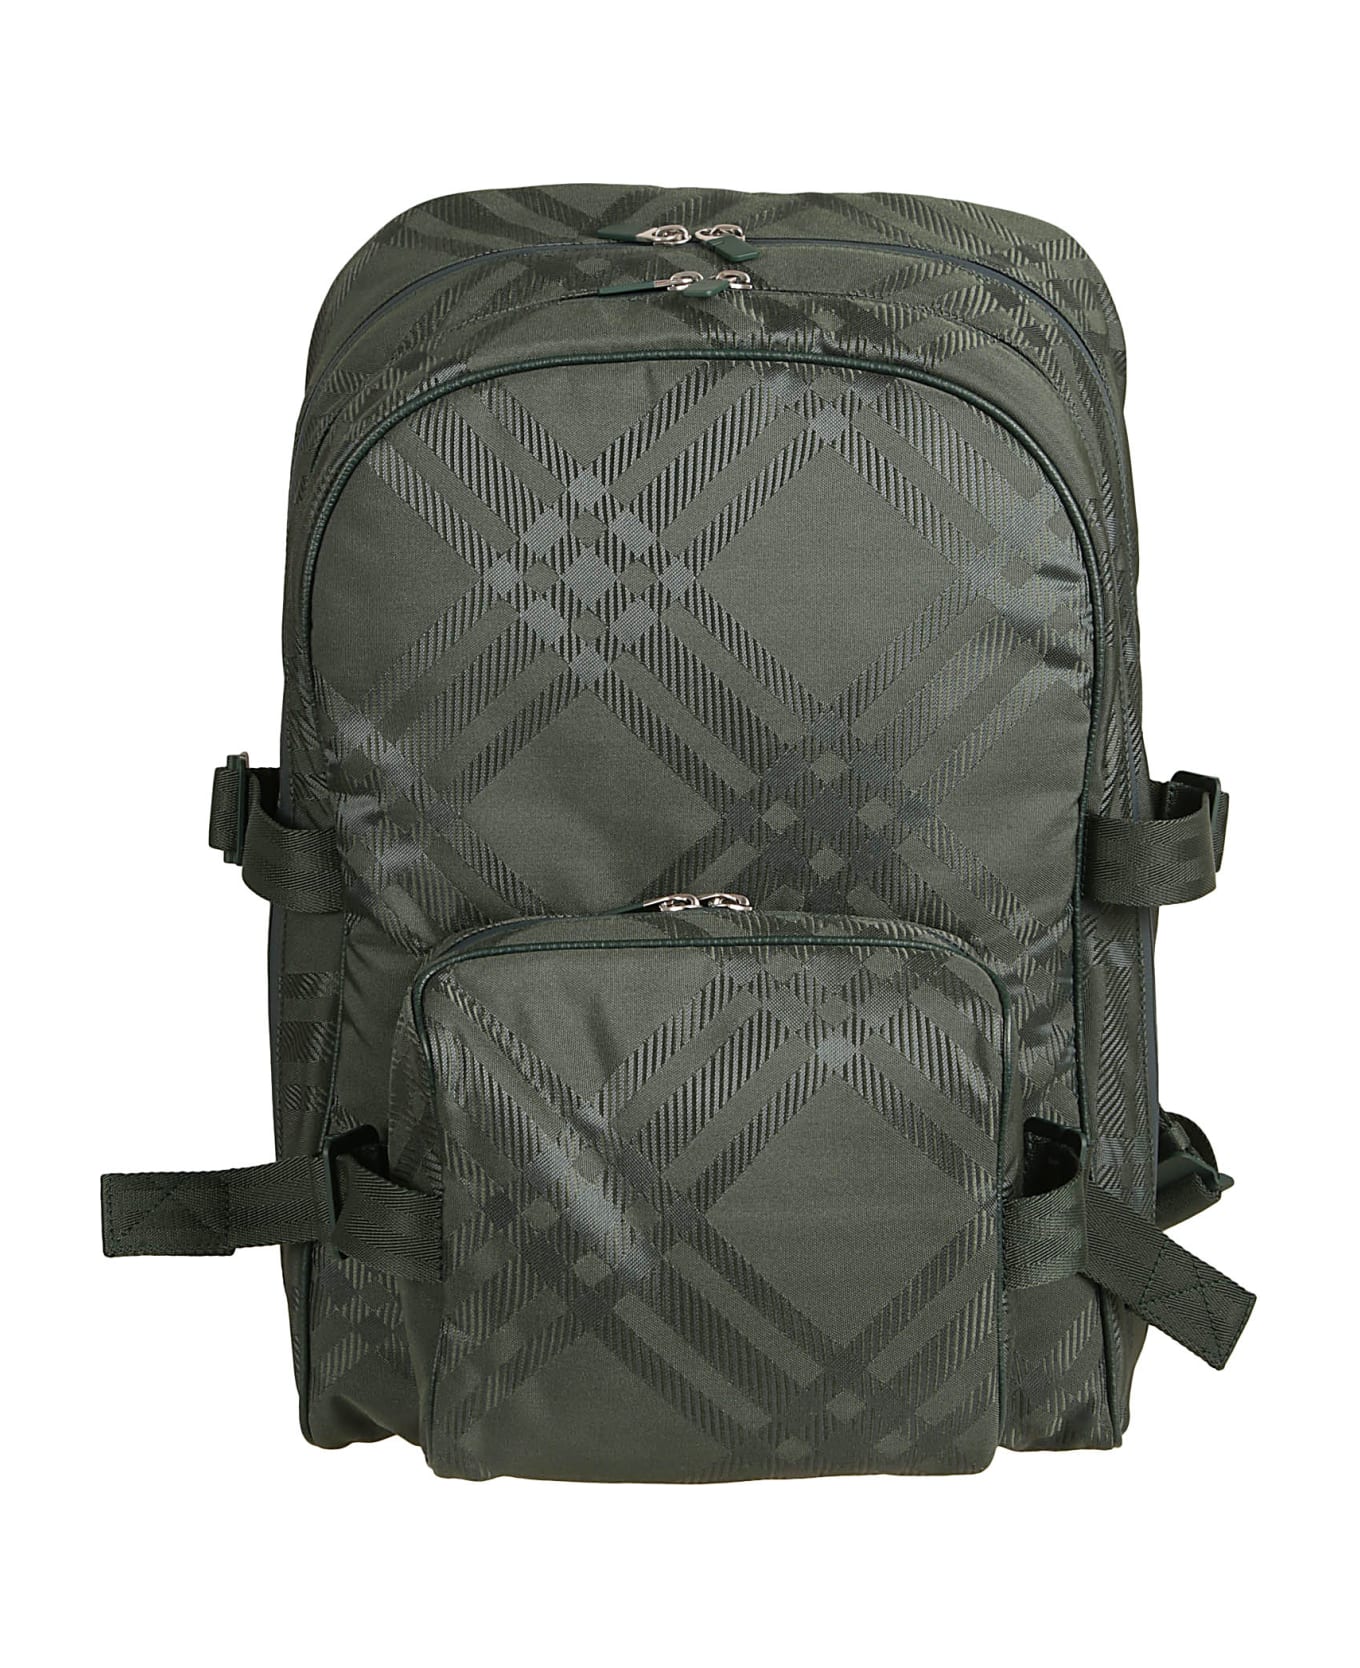 Burberry Check Patterned Backpack - Vine バックパック